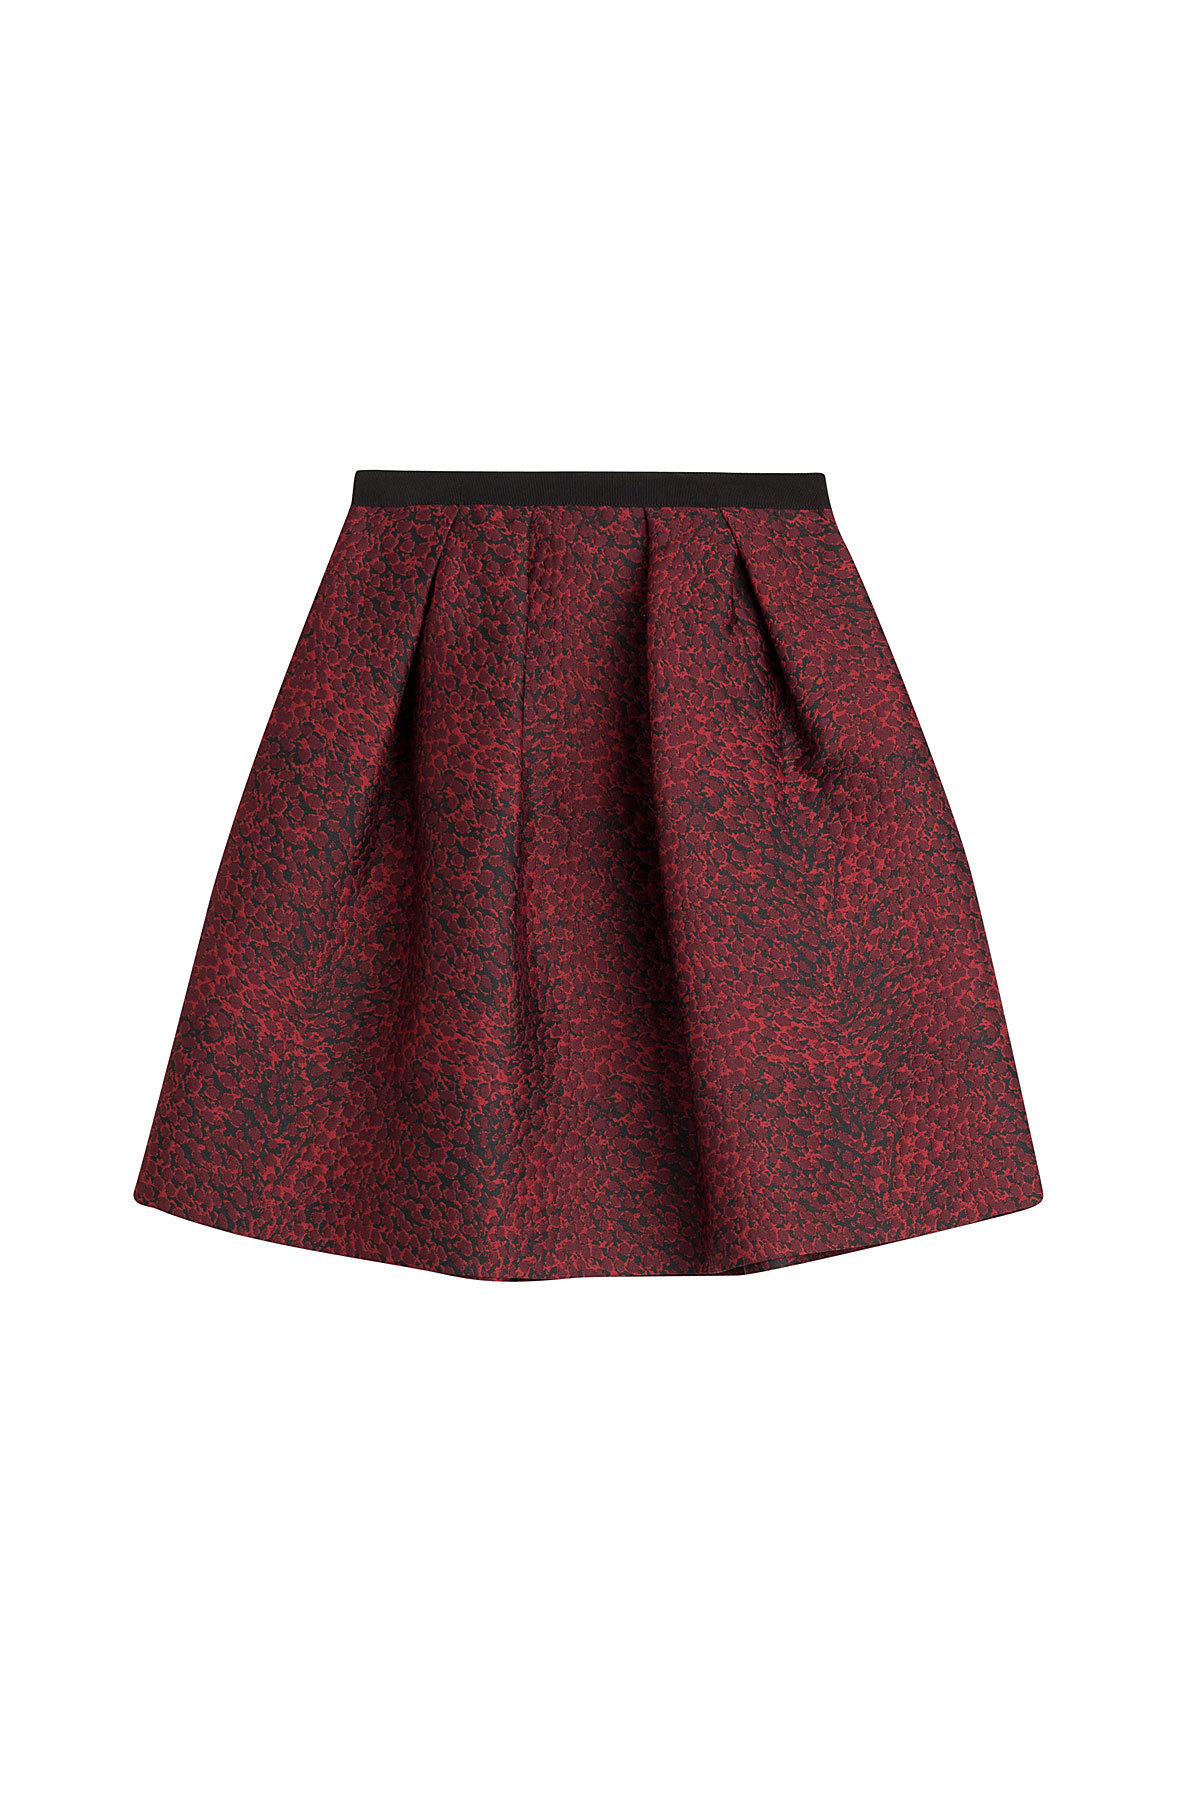 Burberry - Pleated Jacquard Skirt